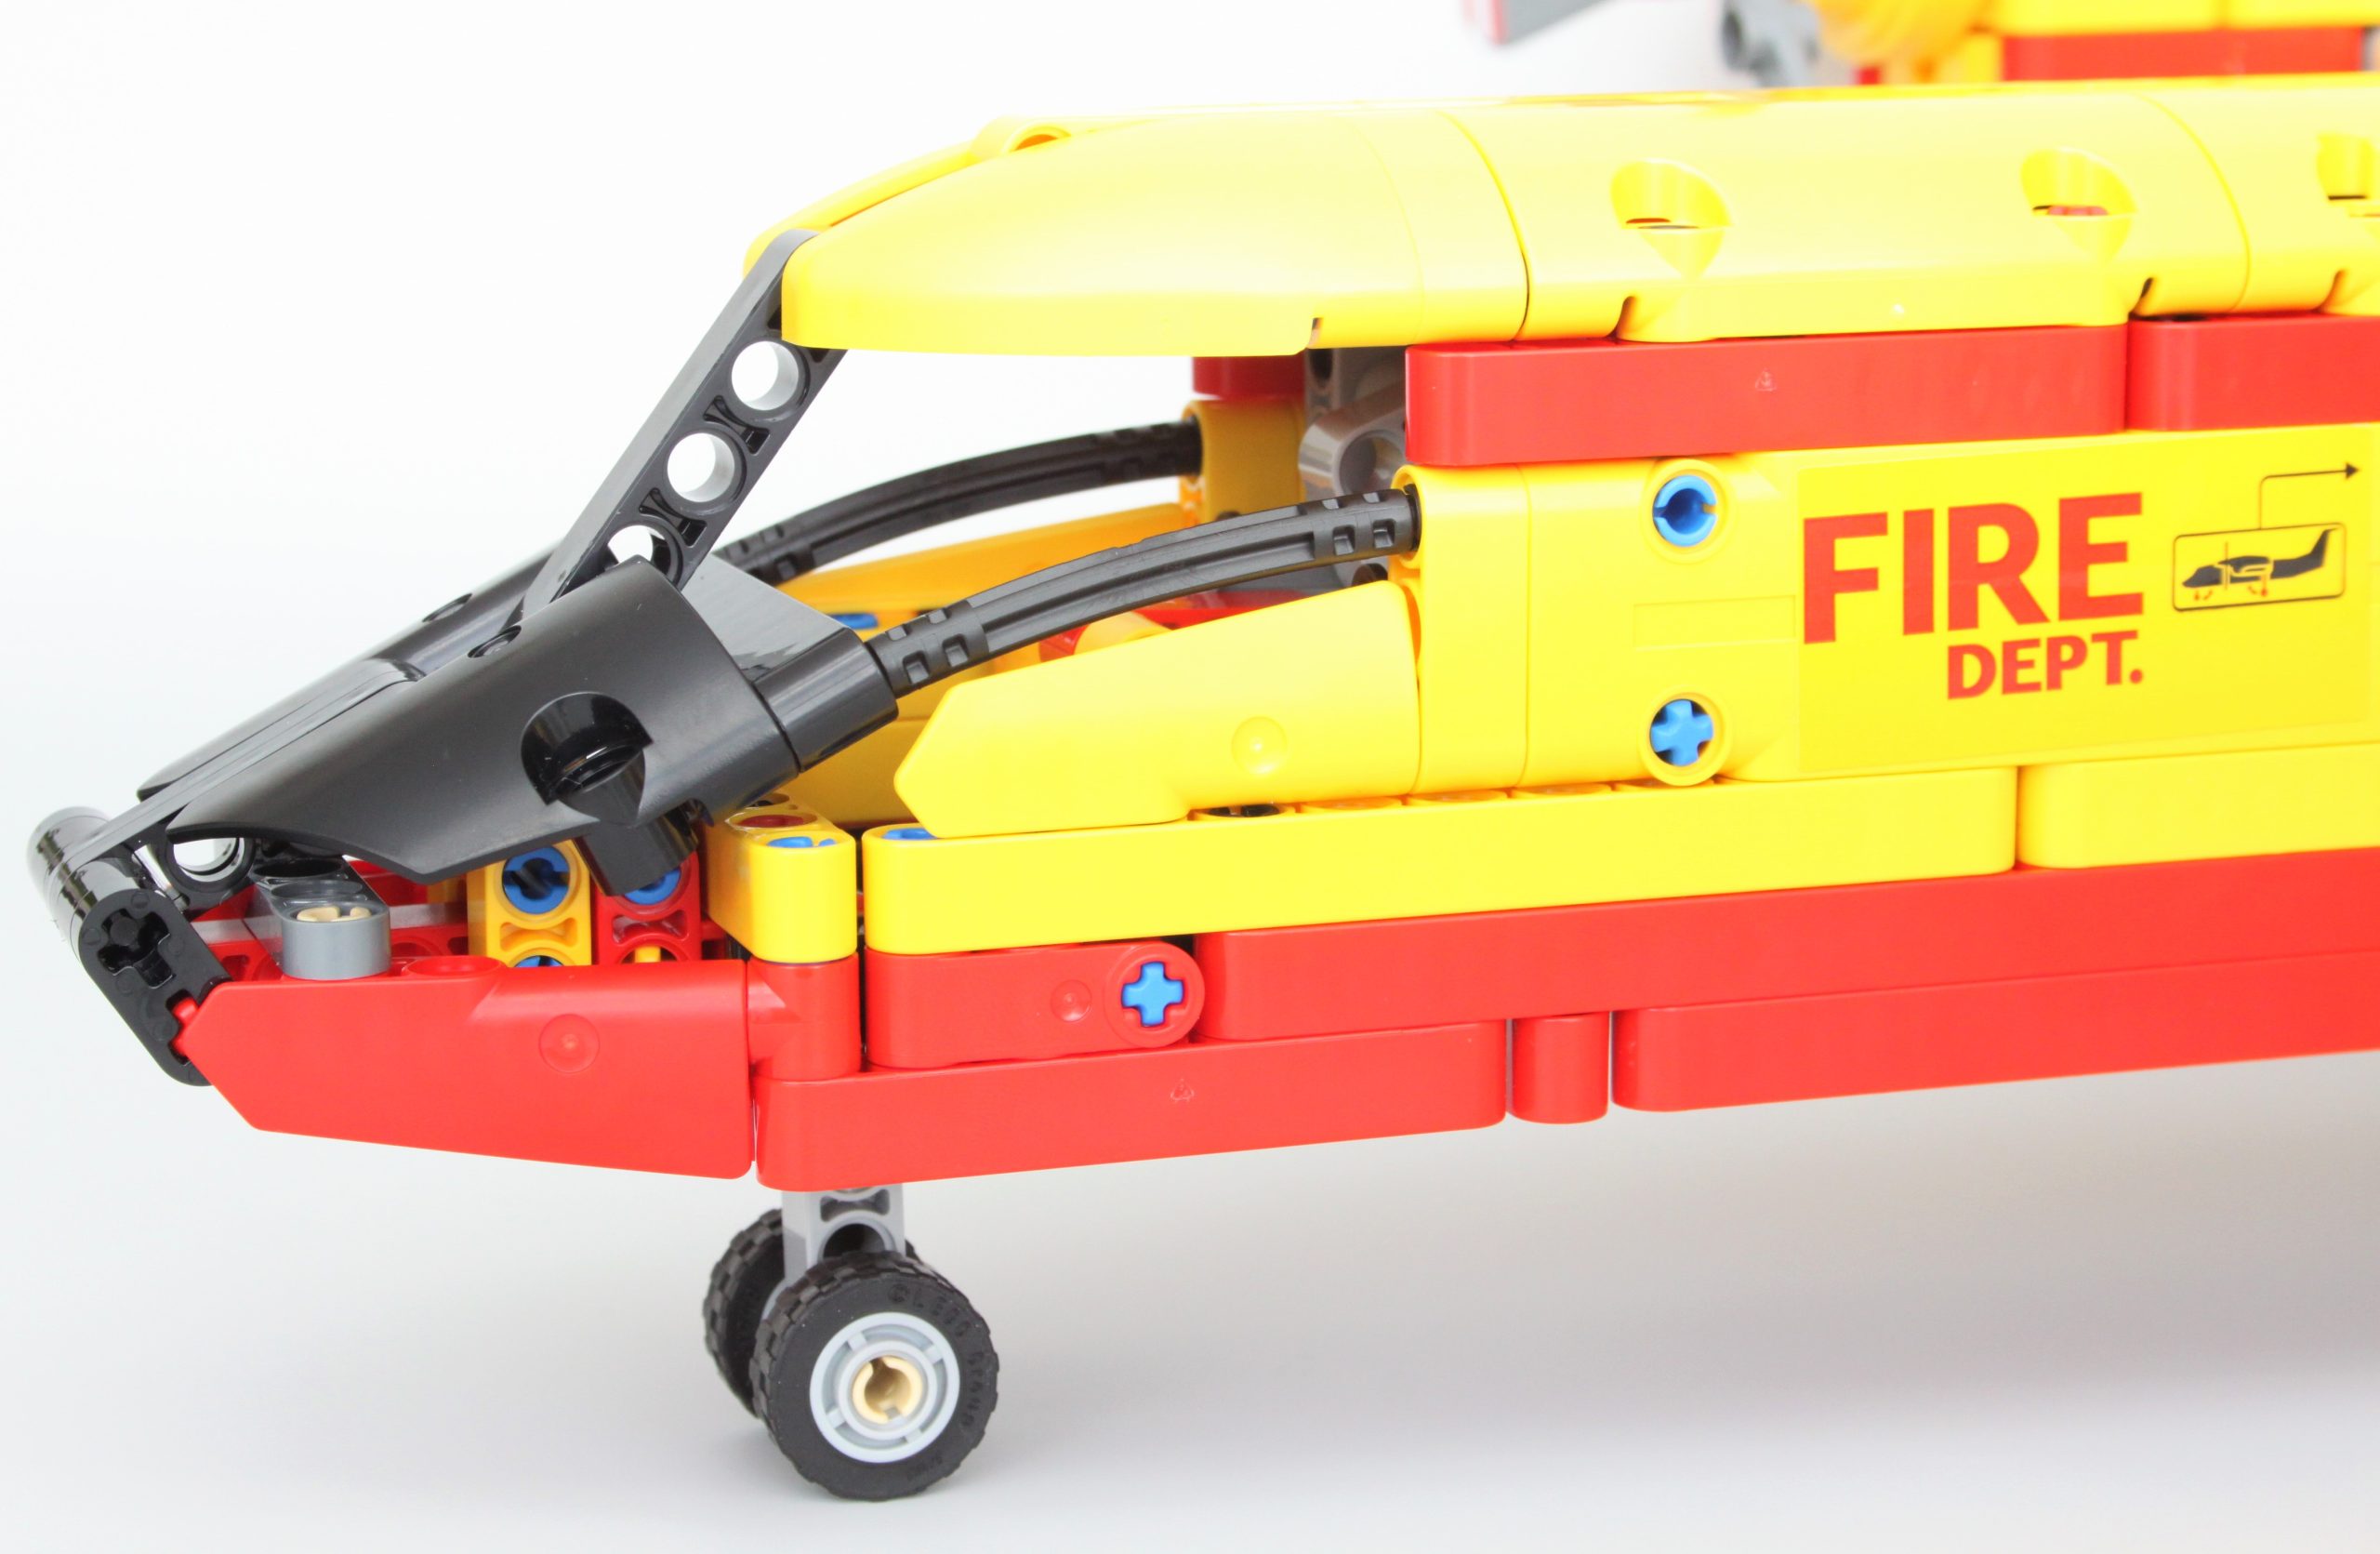 Reseña y galería de LEGO Technic 42152 Firefighter Aircraft